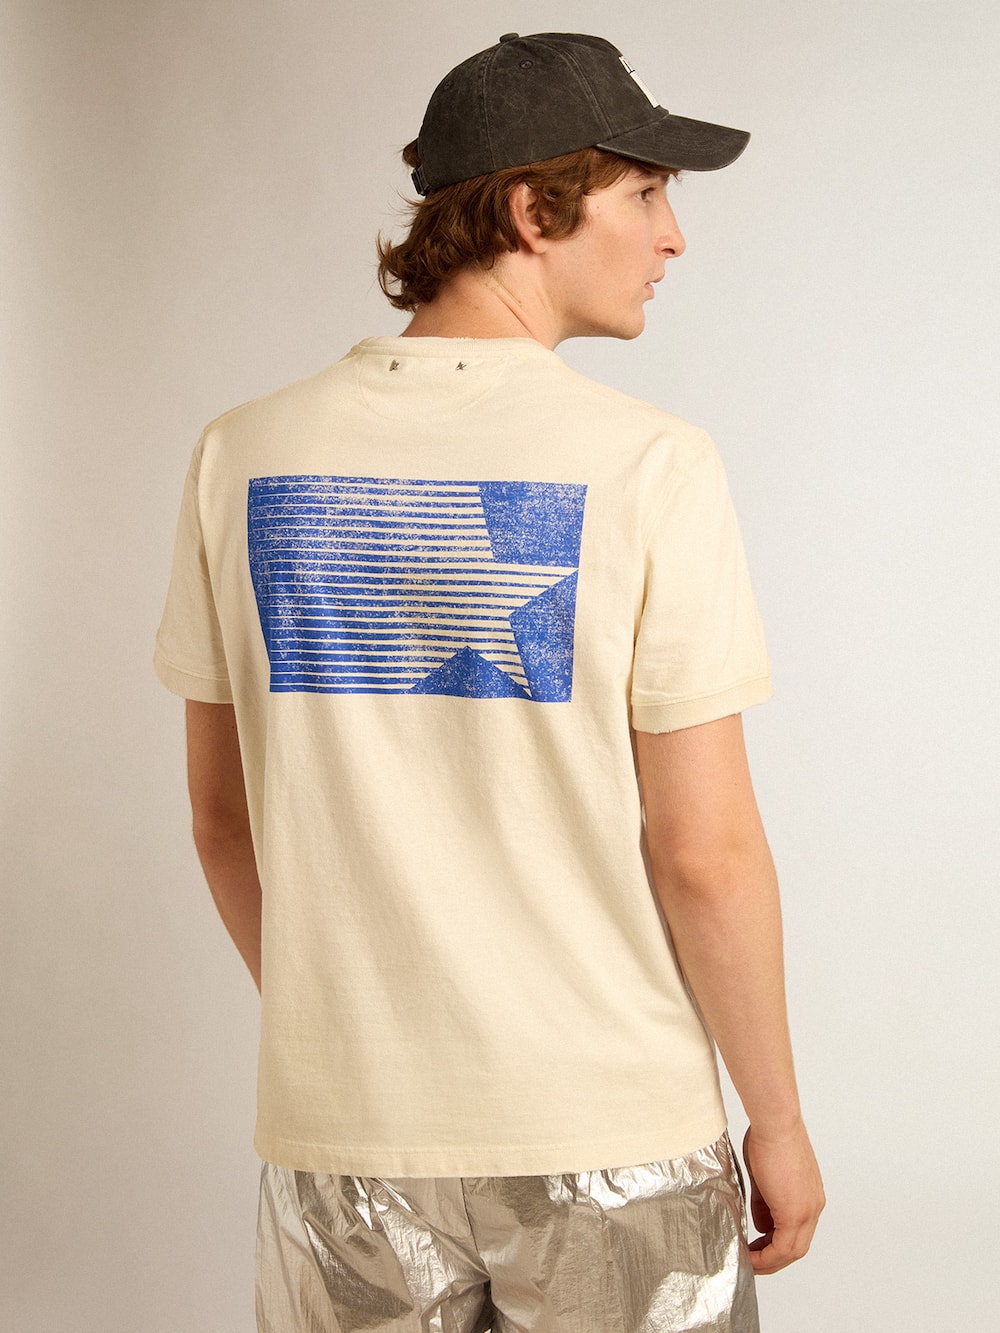 Golden Goose - T-shirt in cotone color bianco vissuto con logo Marathon blu in 